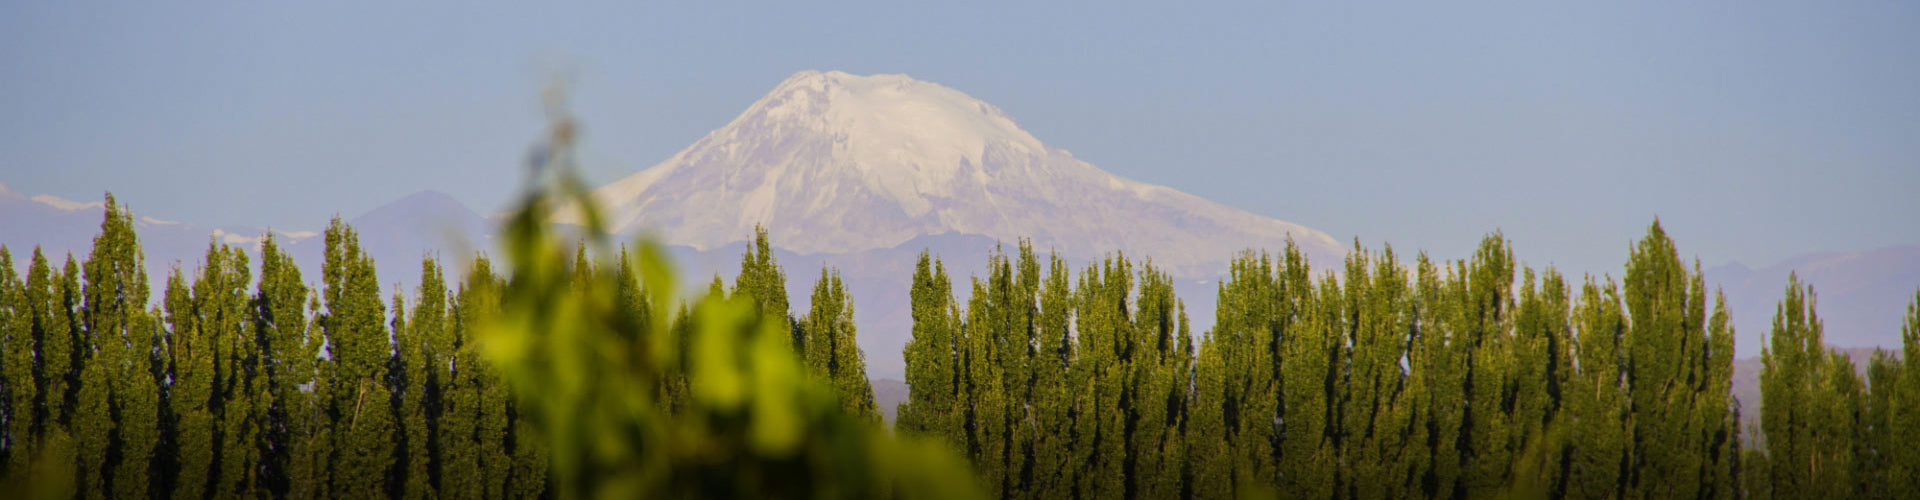 Mendoza Vineyards Argentina